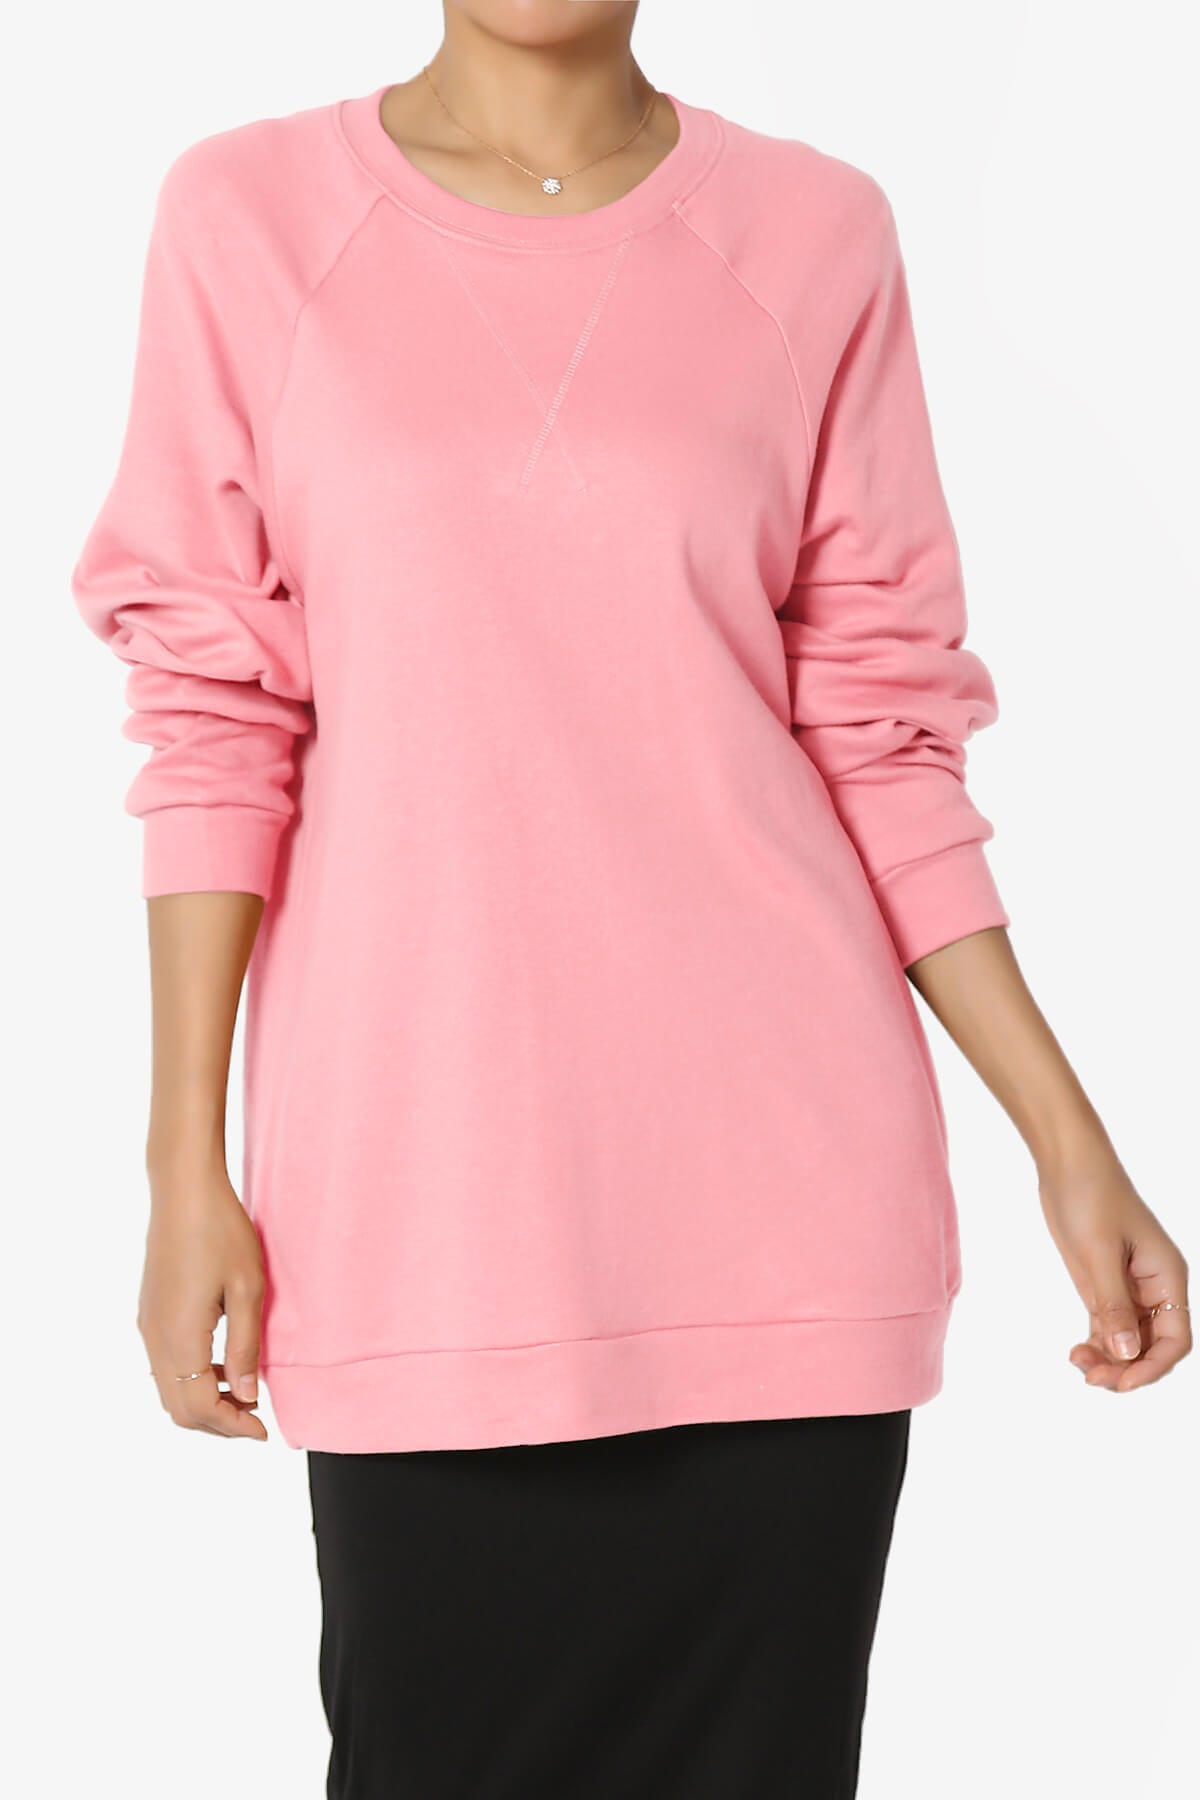 Carlene Cotton Raglan Sleeve Pullover Top BRIGHT PINK_1